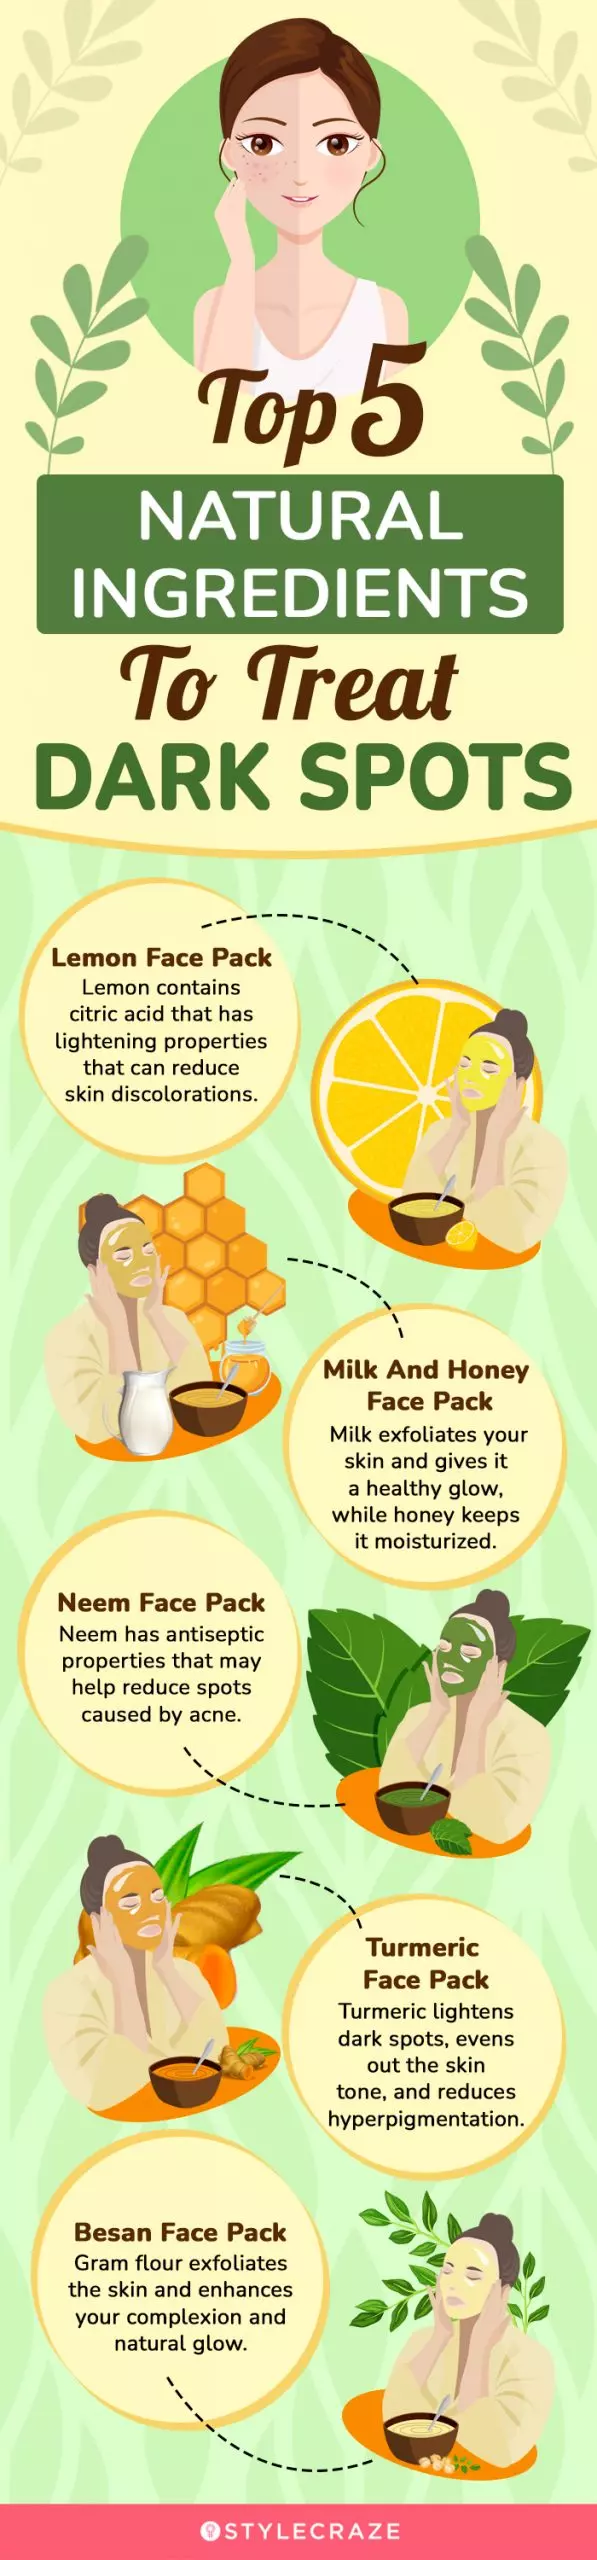 top 5 natural ingredients to treat dark spots (infographic)